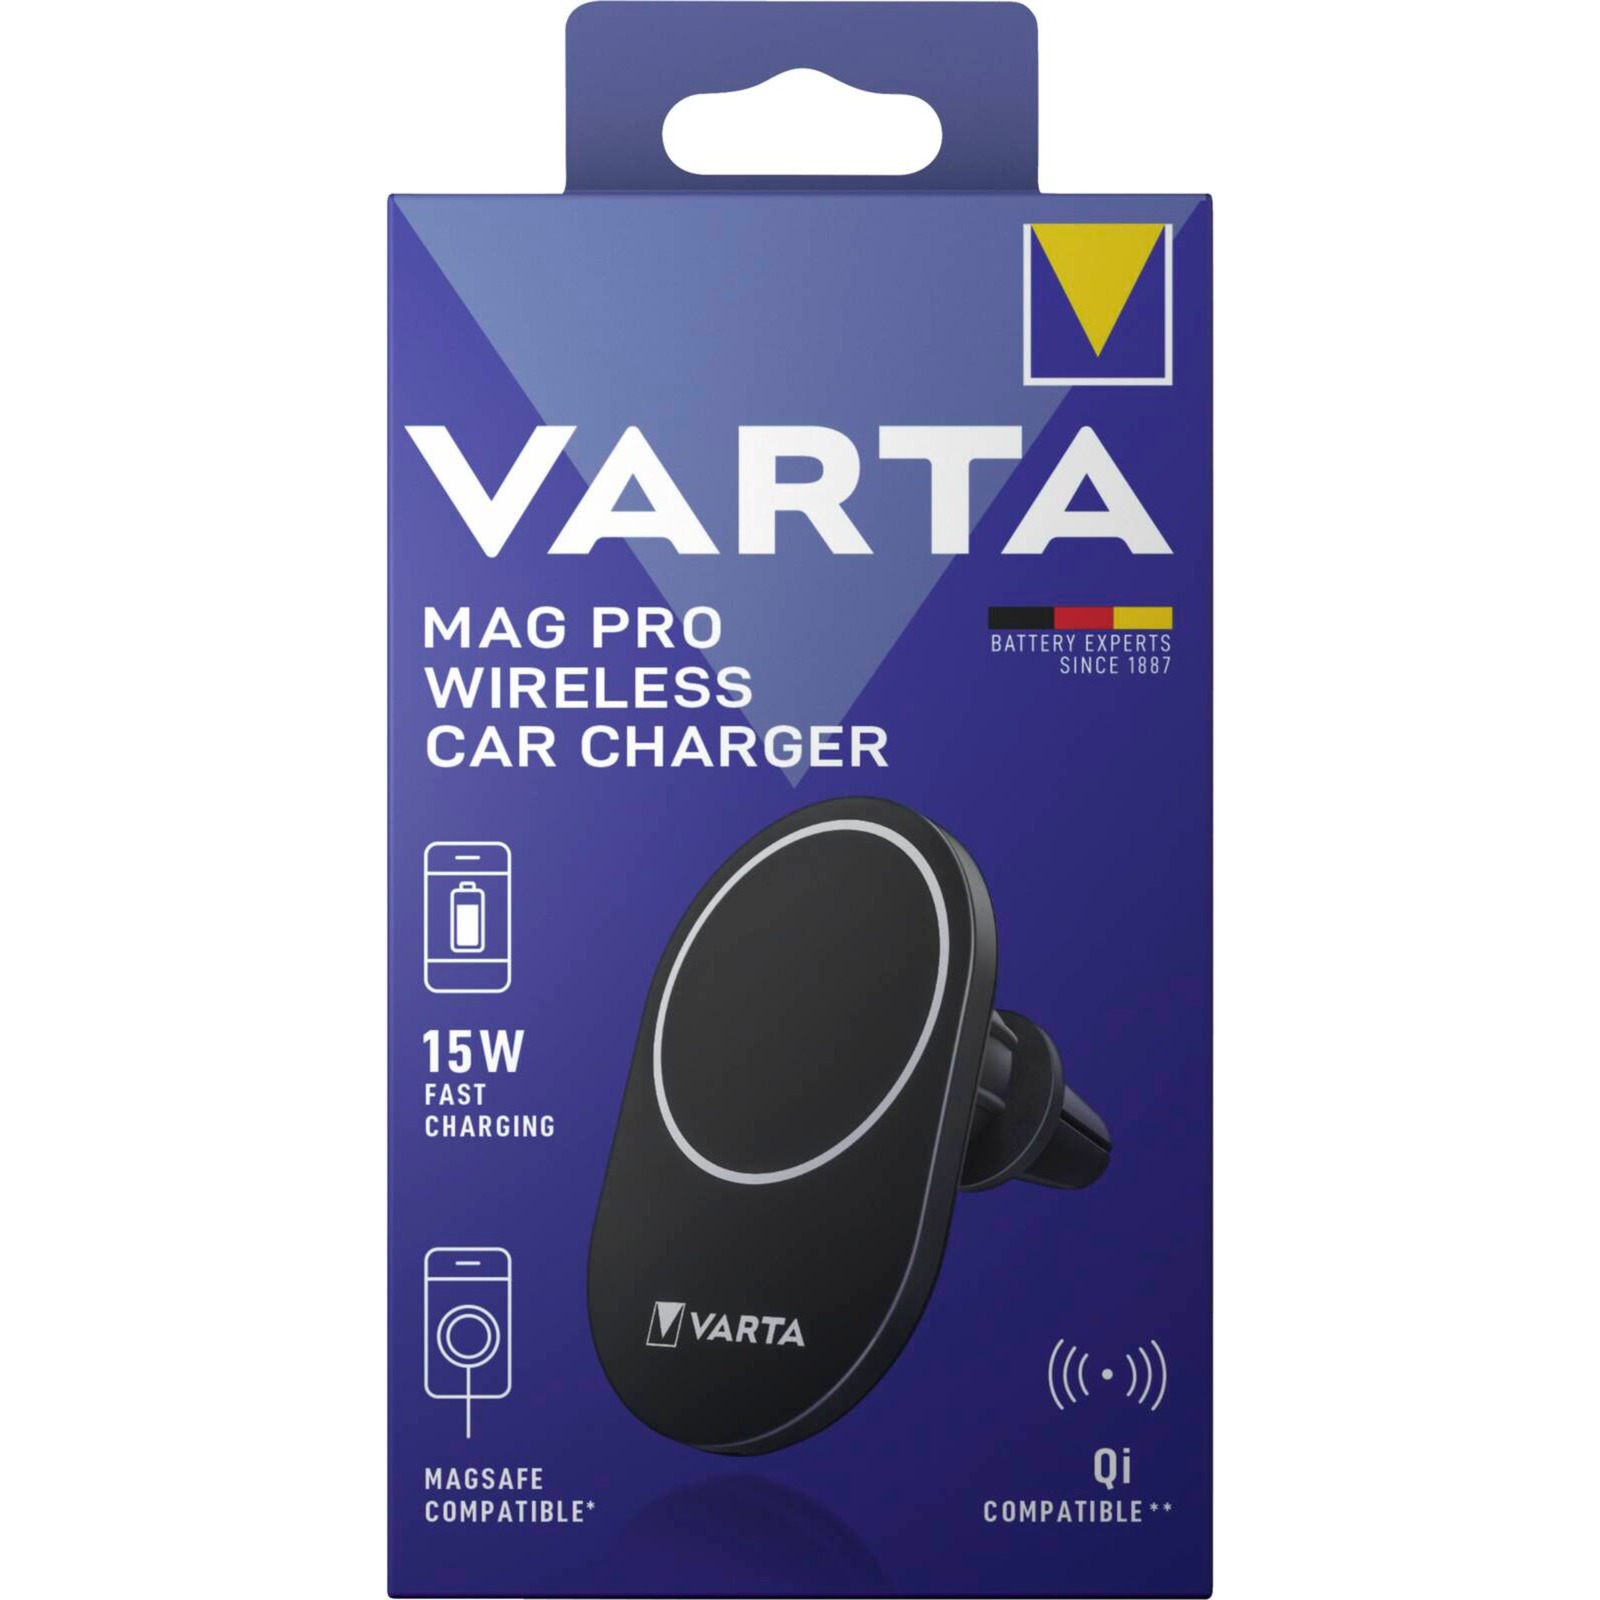 Mag Pro Wireless Car Charger, Ladegerät von Varta